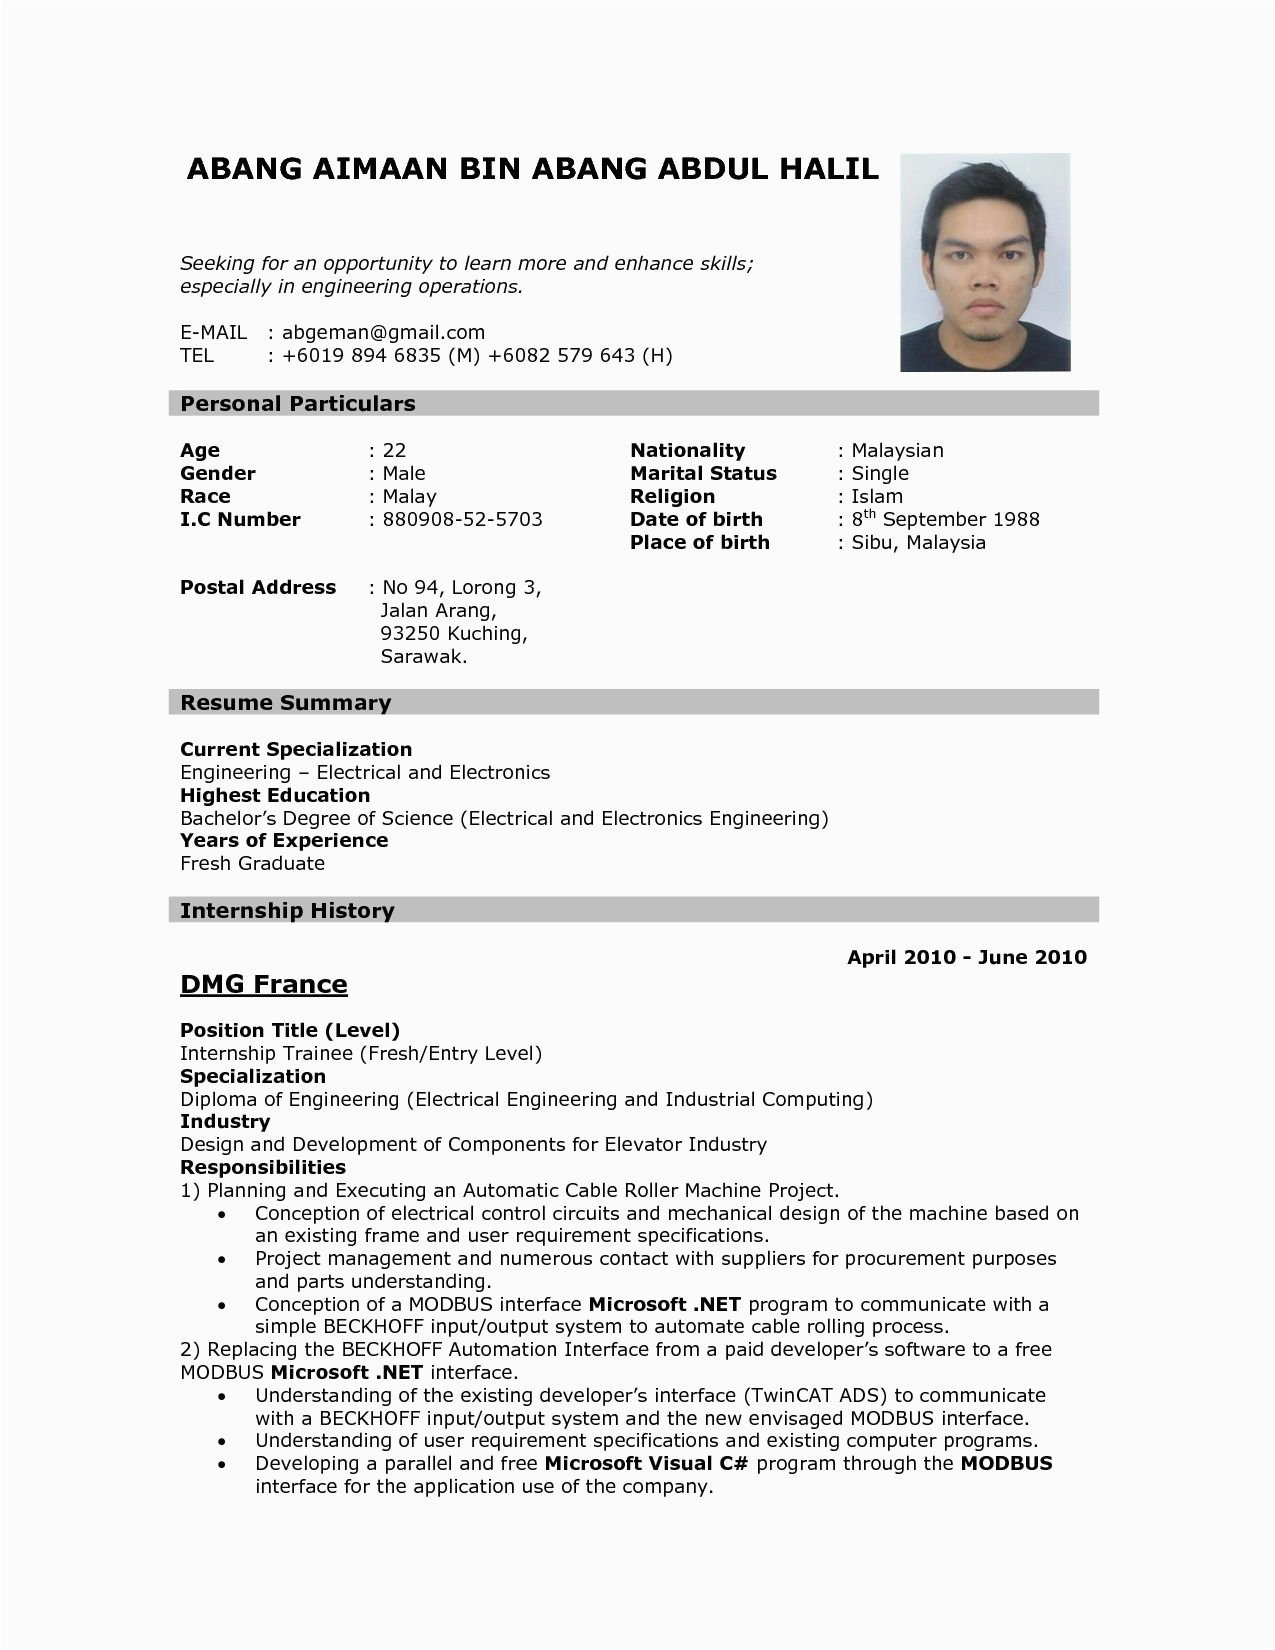 Resume format Sample for Job Application Sample Resume format for Job Application Resume Templates